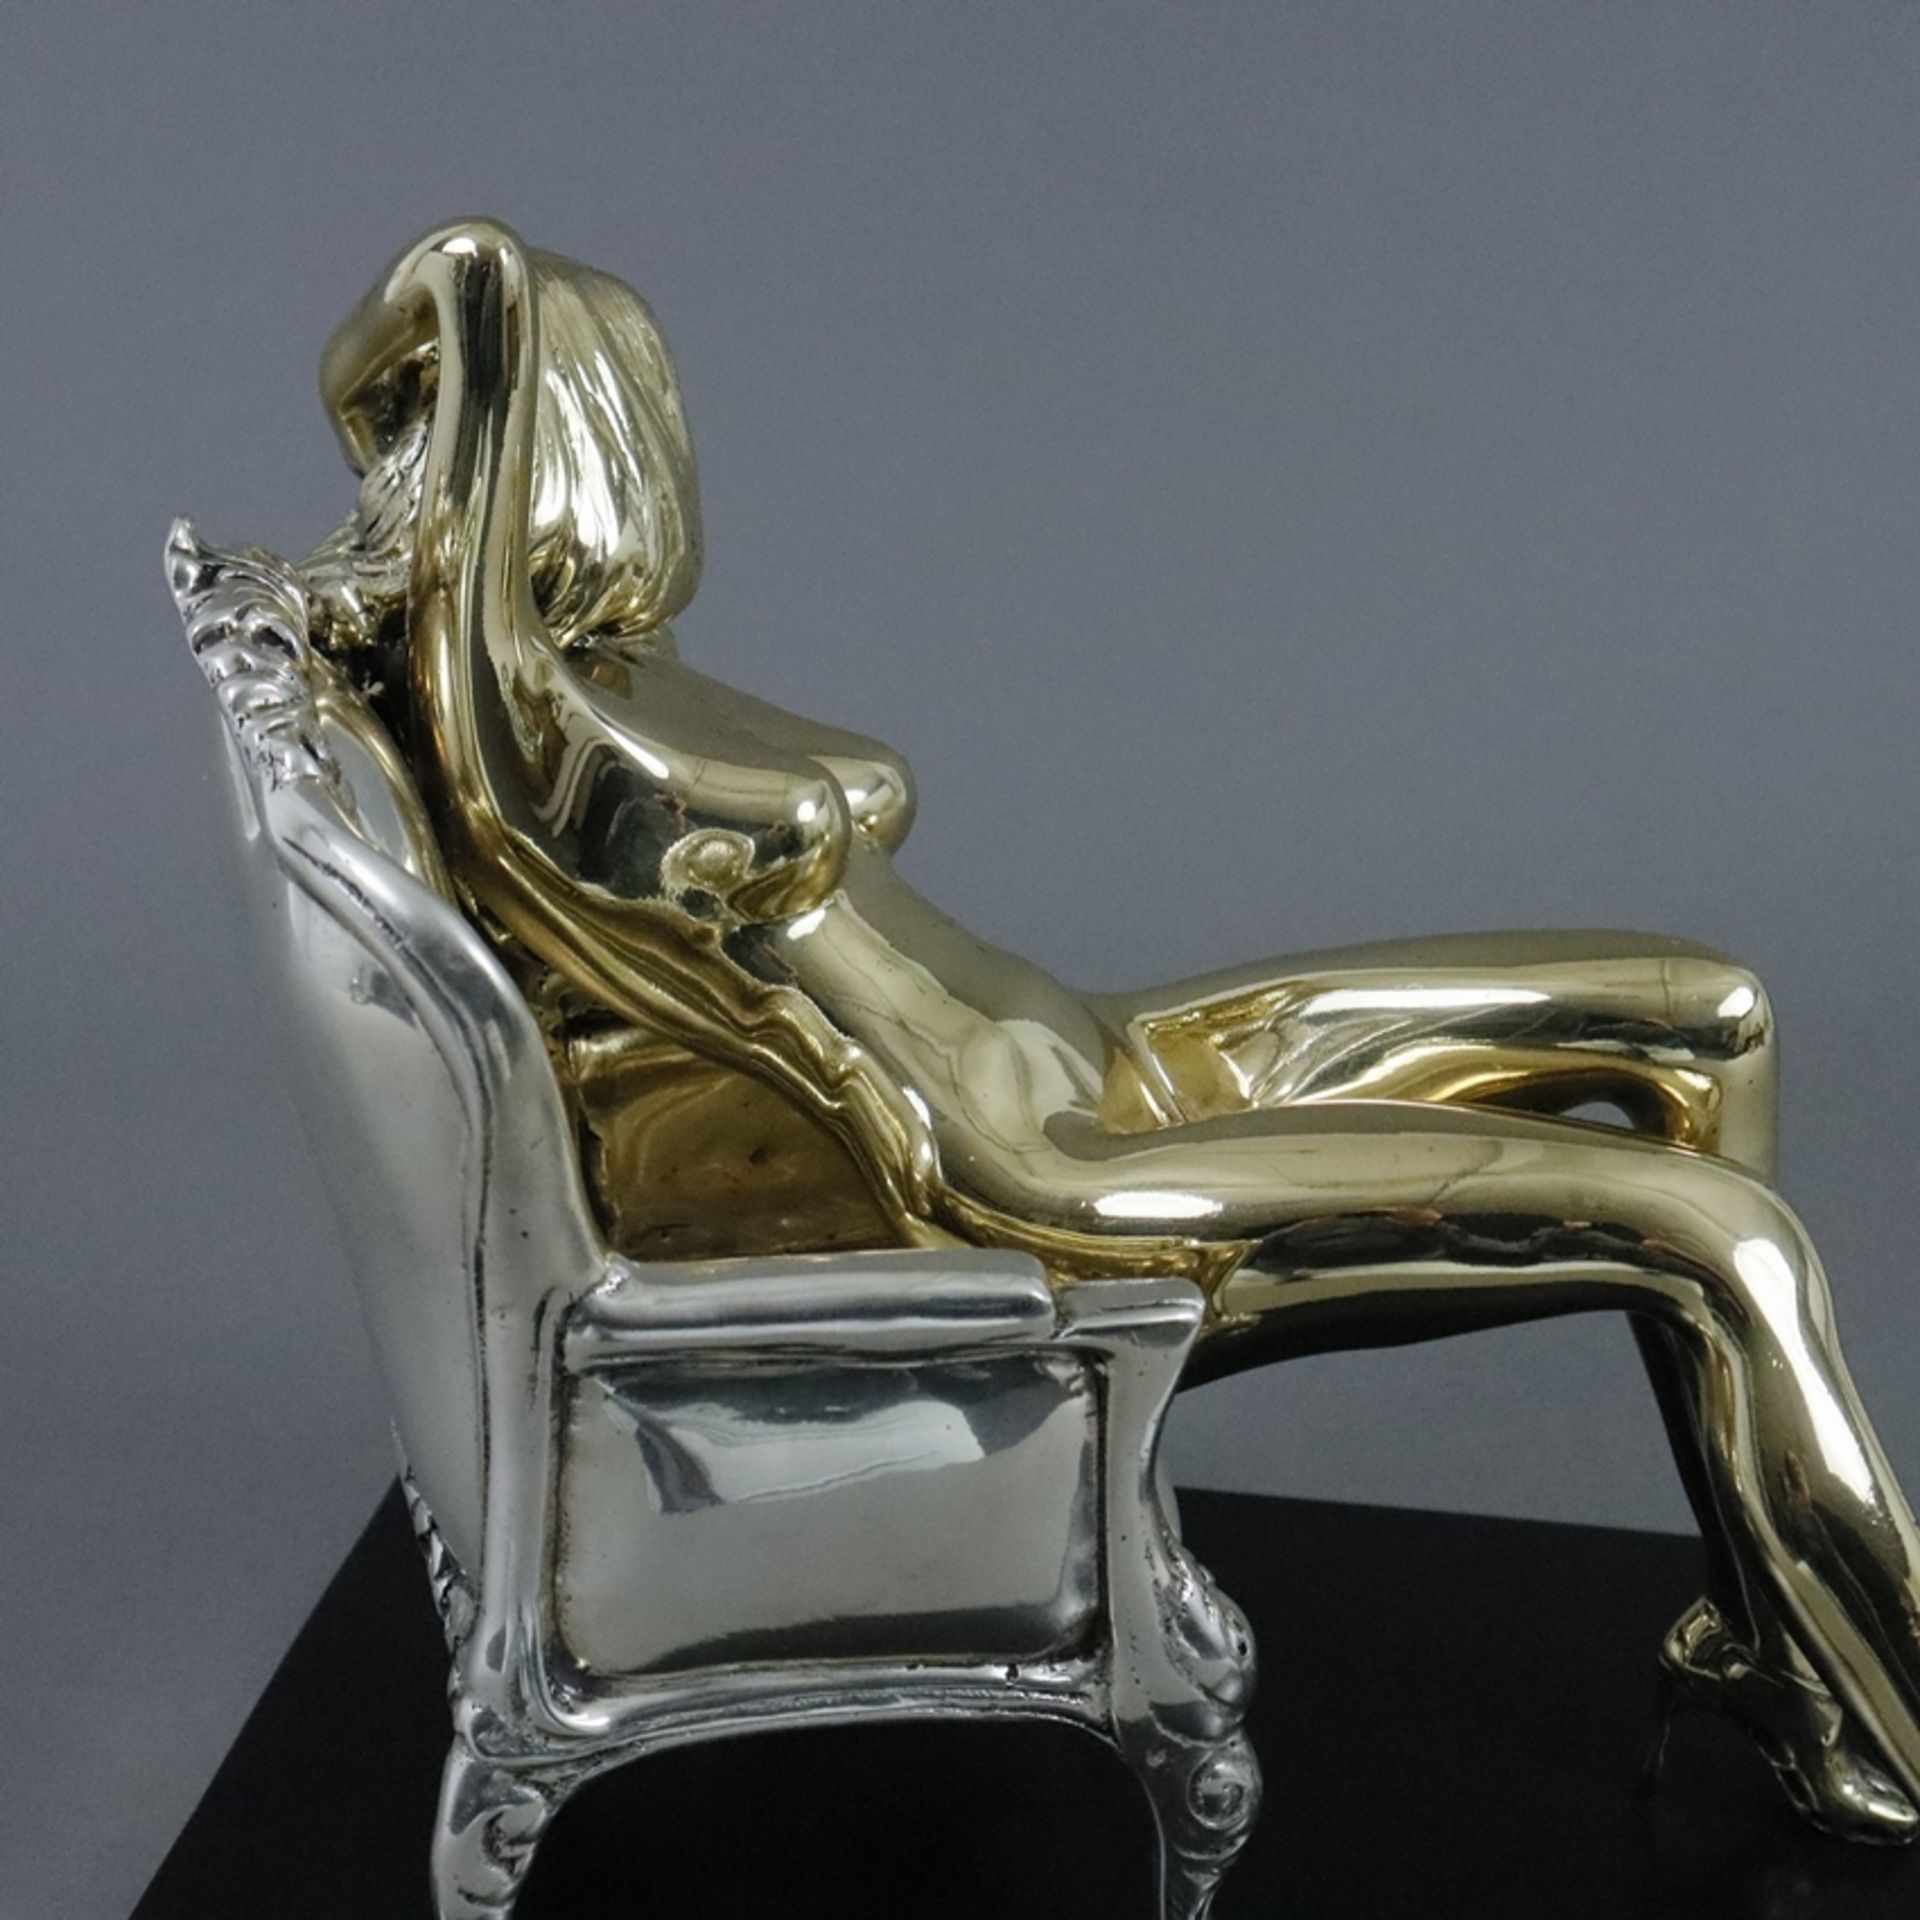 Erotische Frauenfigur 'Rosemary'' - exklusives Design, Damenakt in lasziver Pose auf Sessel, Messin - Bild 7 aus 9